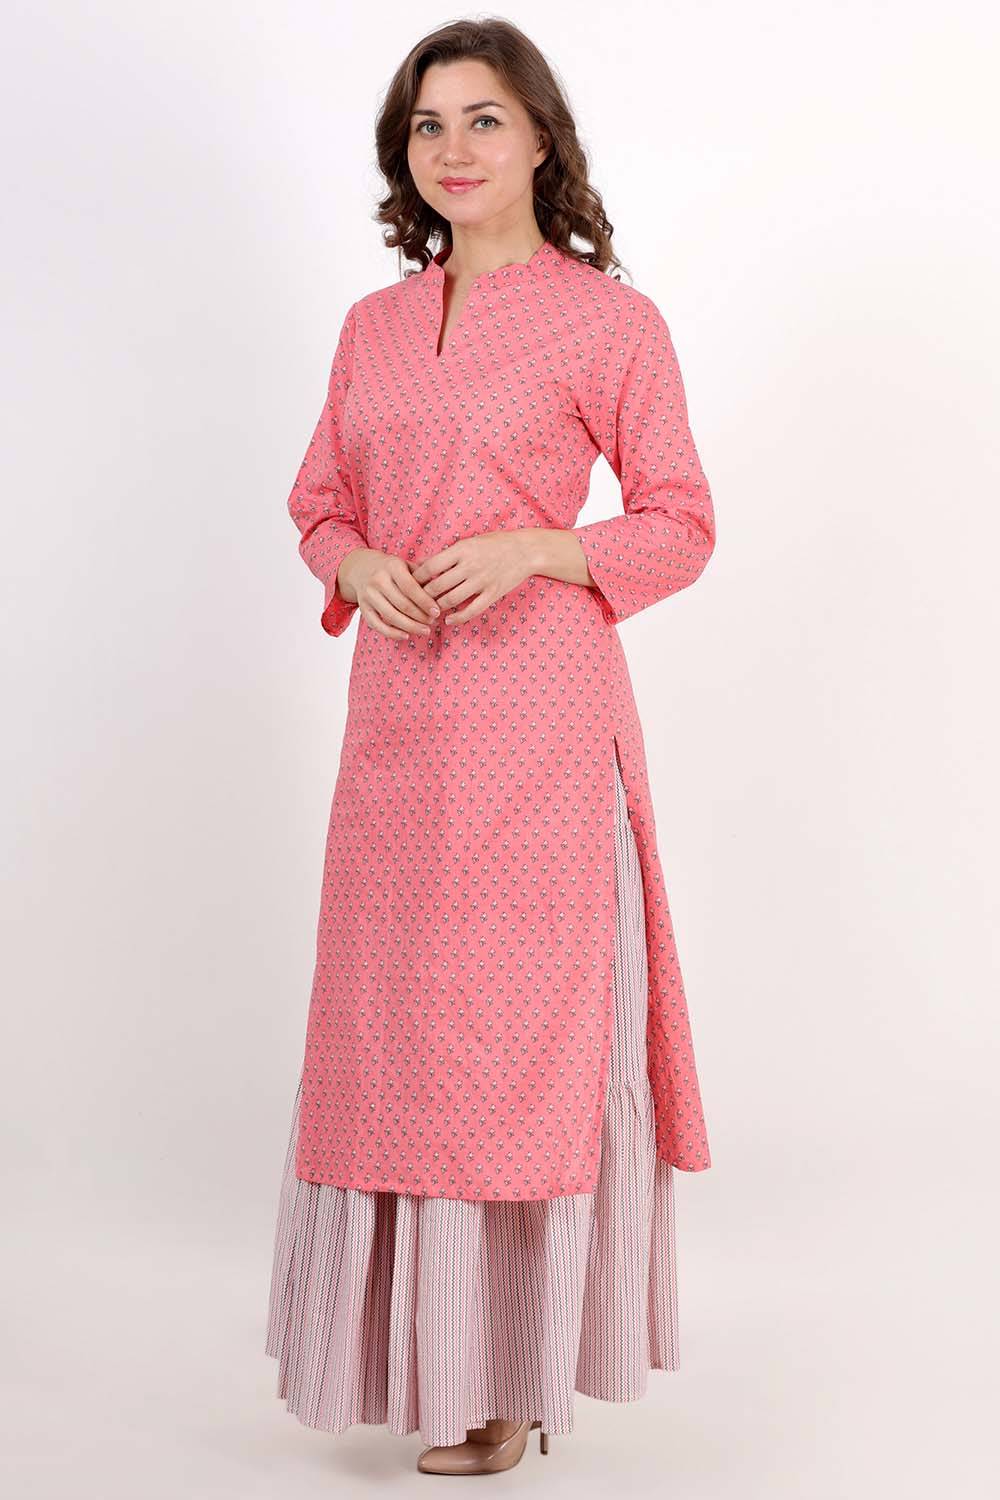 Buy Vastra Vinod Cotton Kurti With Skirt In Beige (Medium) at Amazon.in